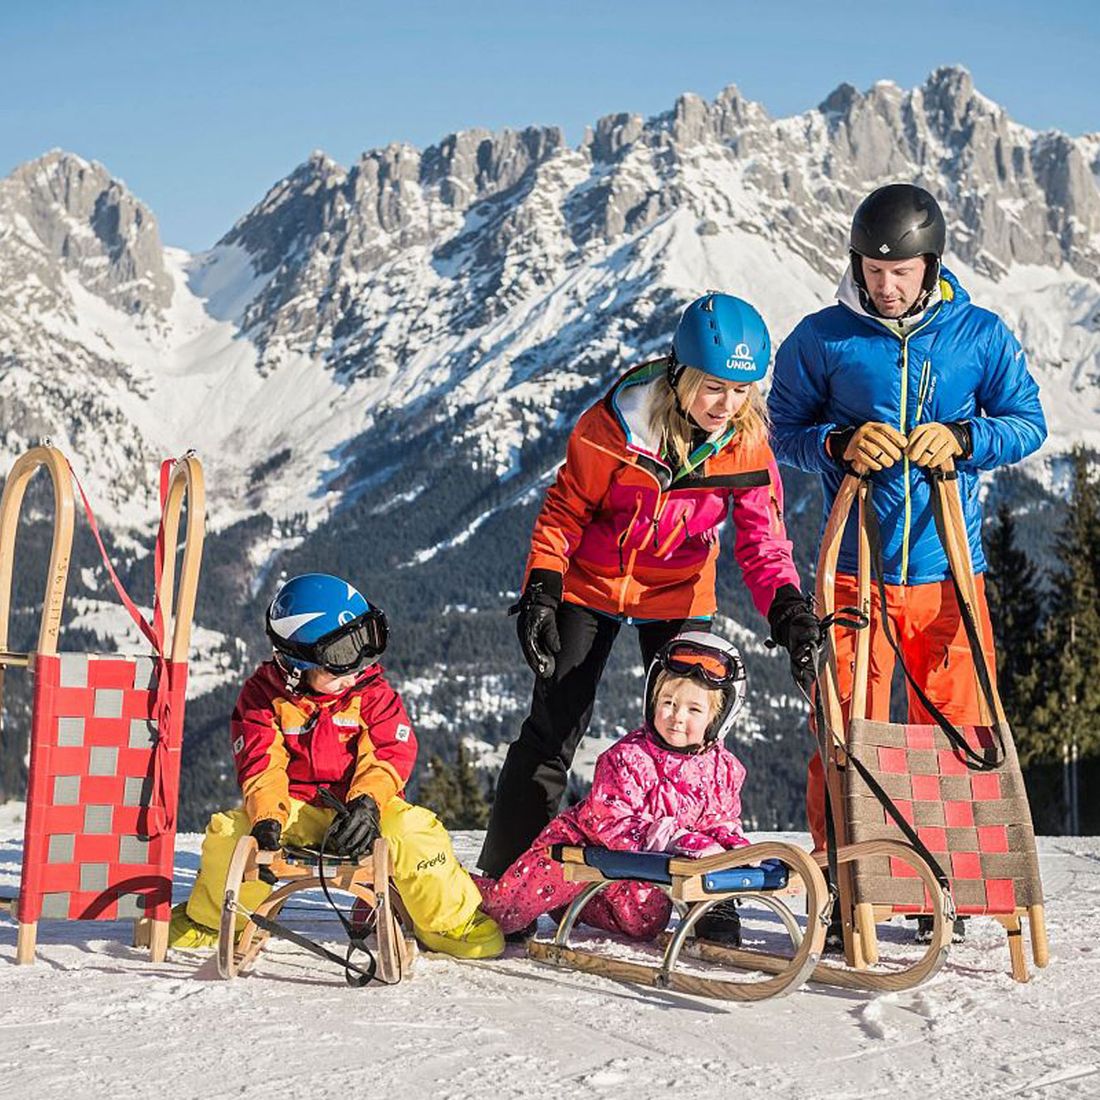 Tobogganing in the ski world